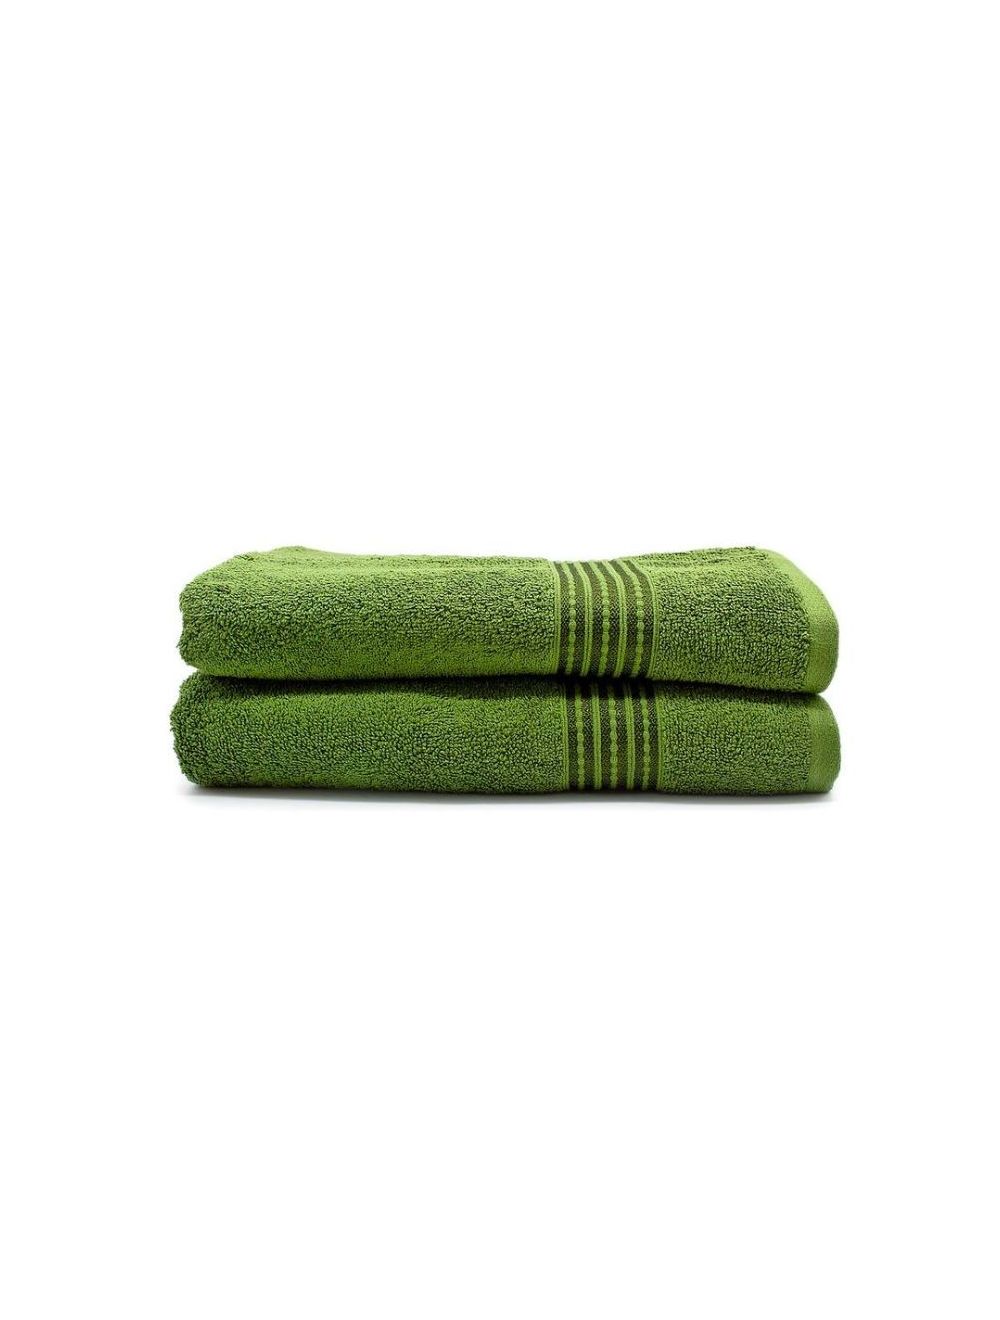 Rahalife 100% Cotton 2-Piece Bath Towel Set, Classic Collection, Green-14RLBT007